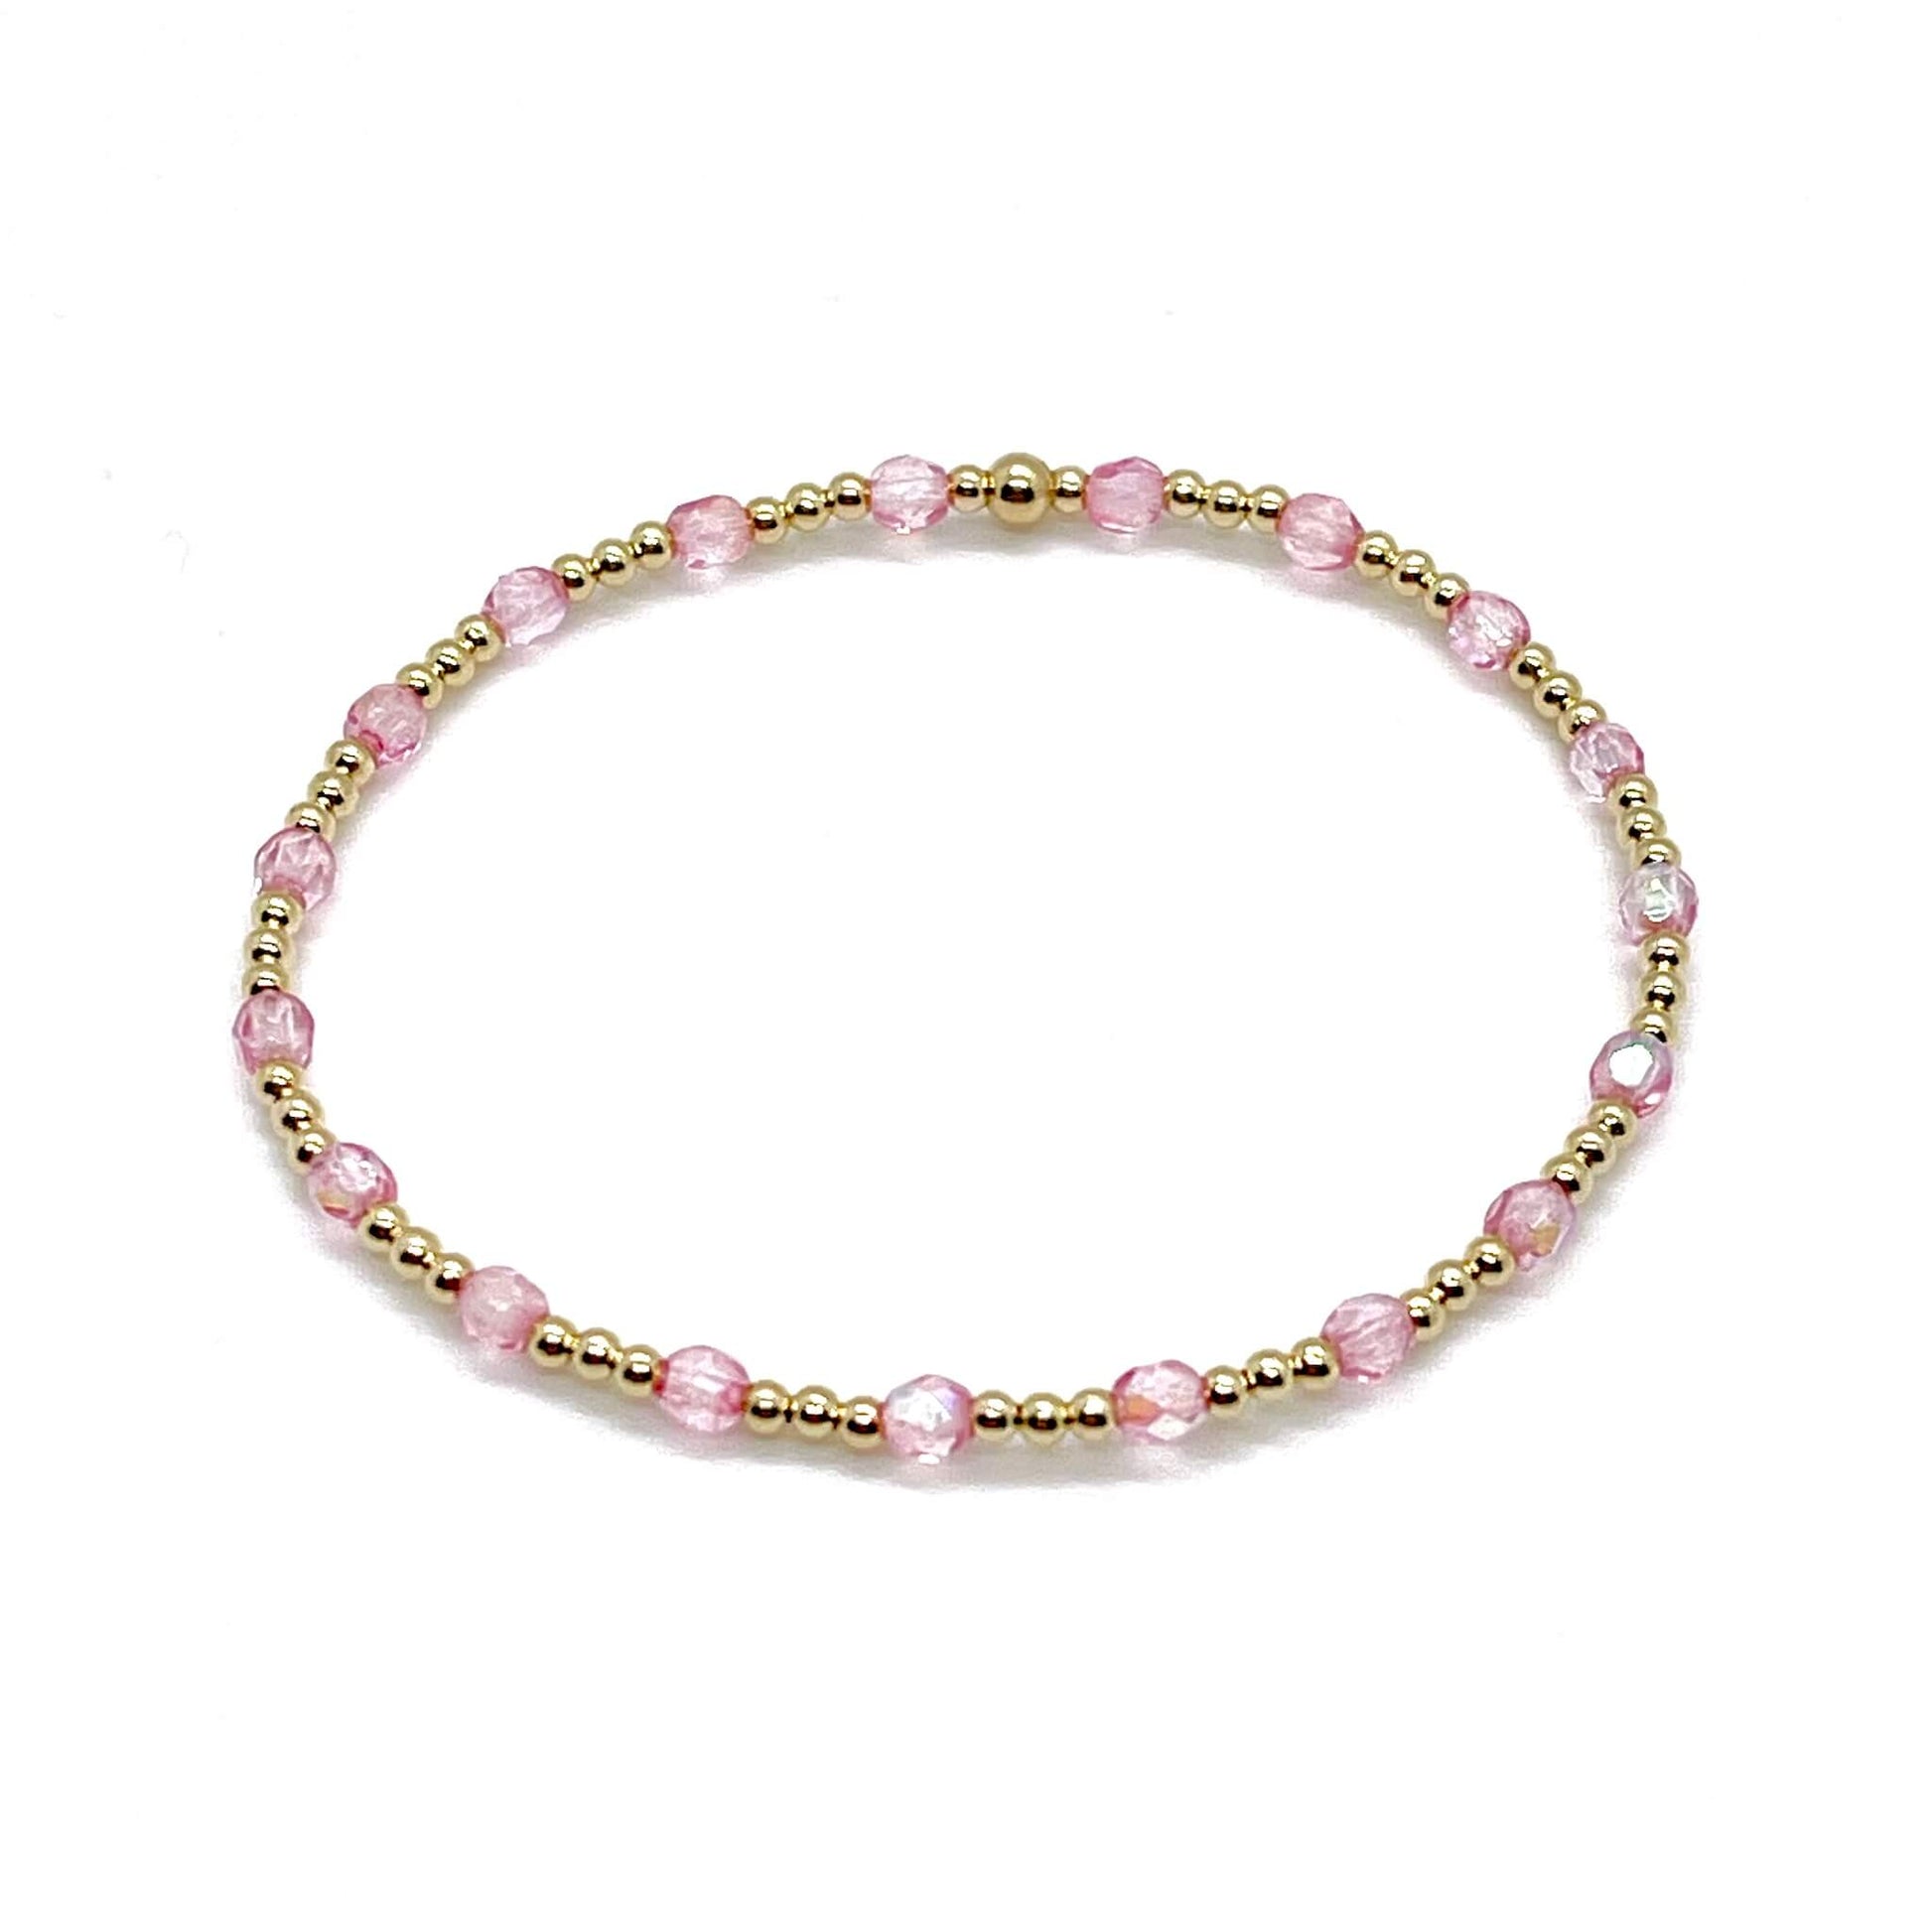 Pink crystal bracelet wtih gold beads. Delicate, handmade womens stretch bracelet.